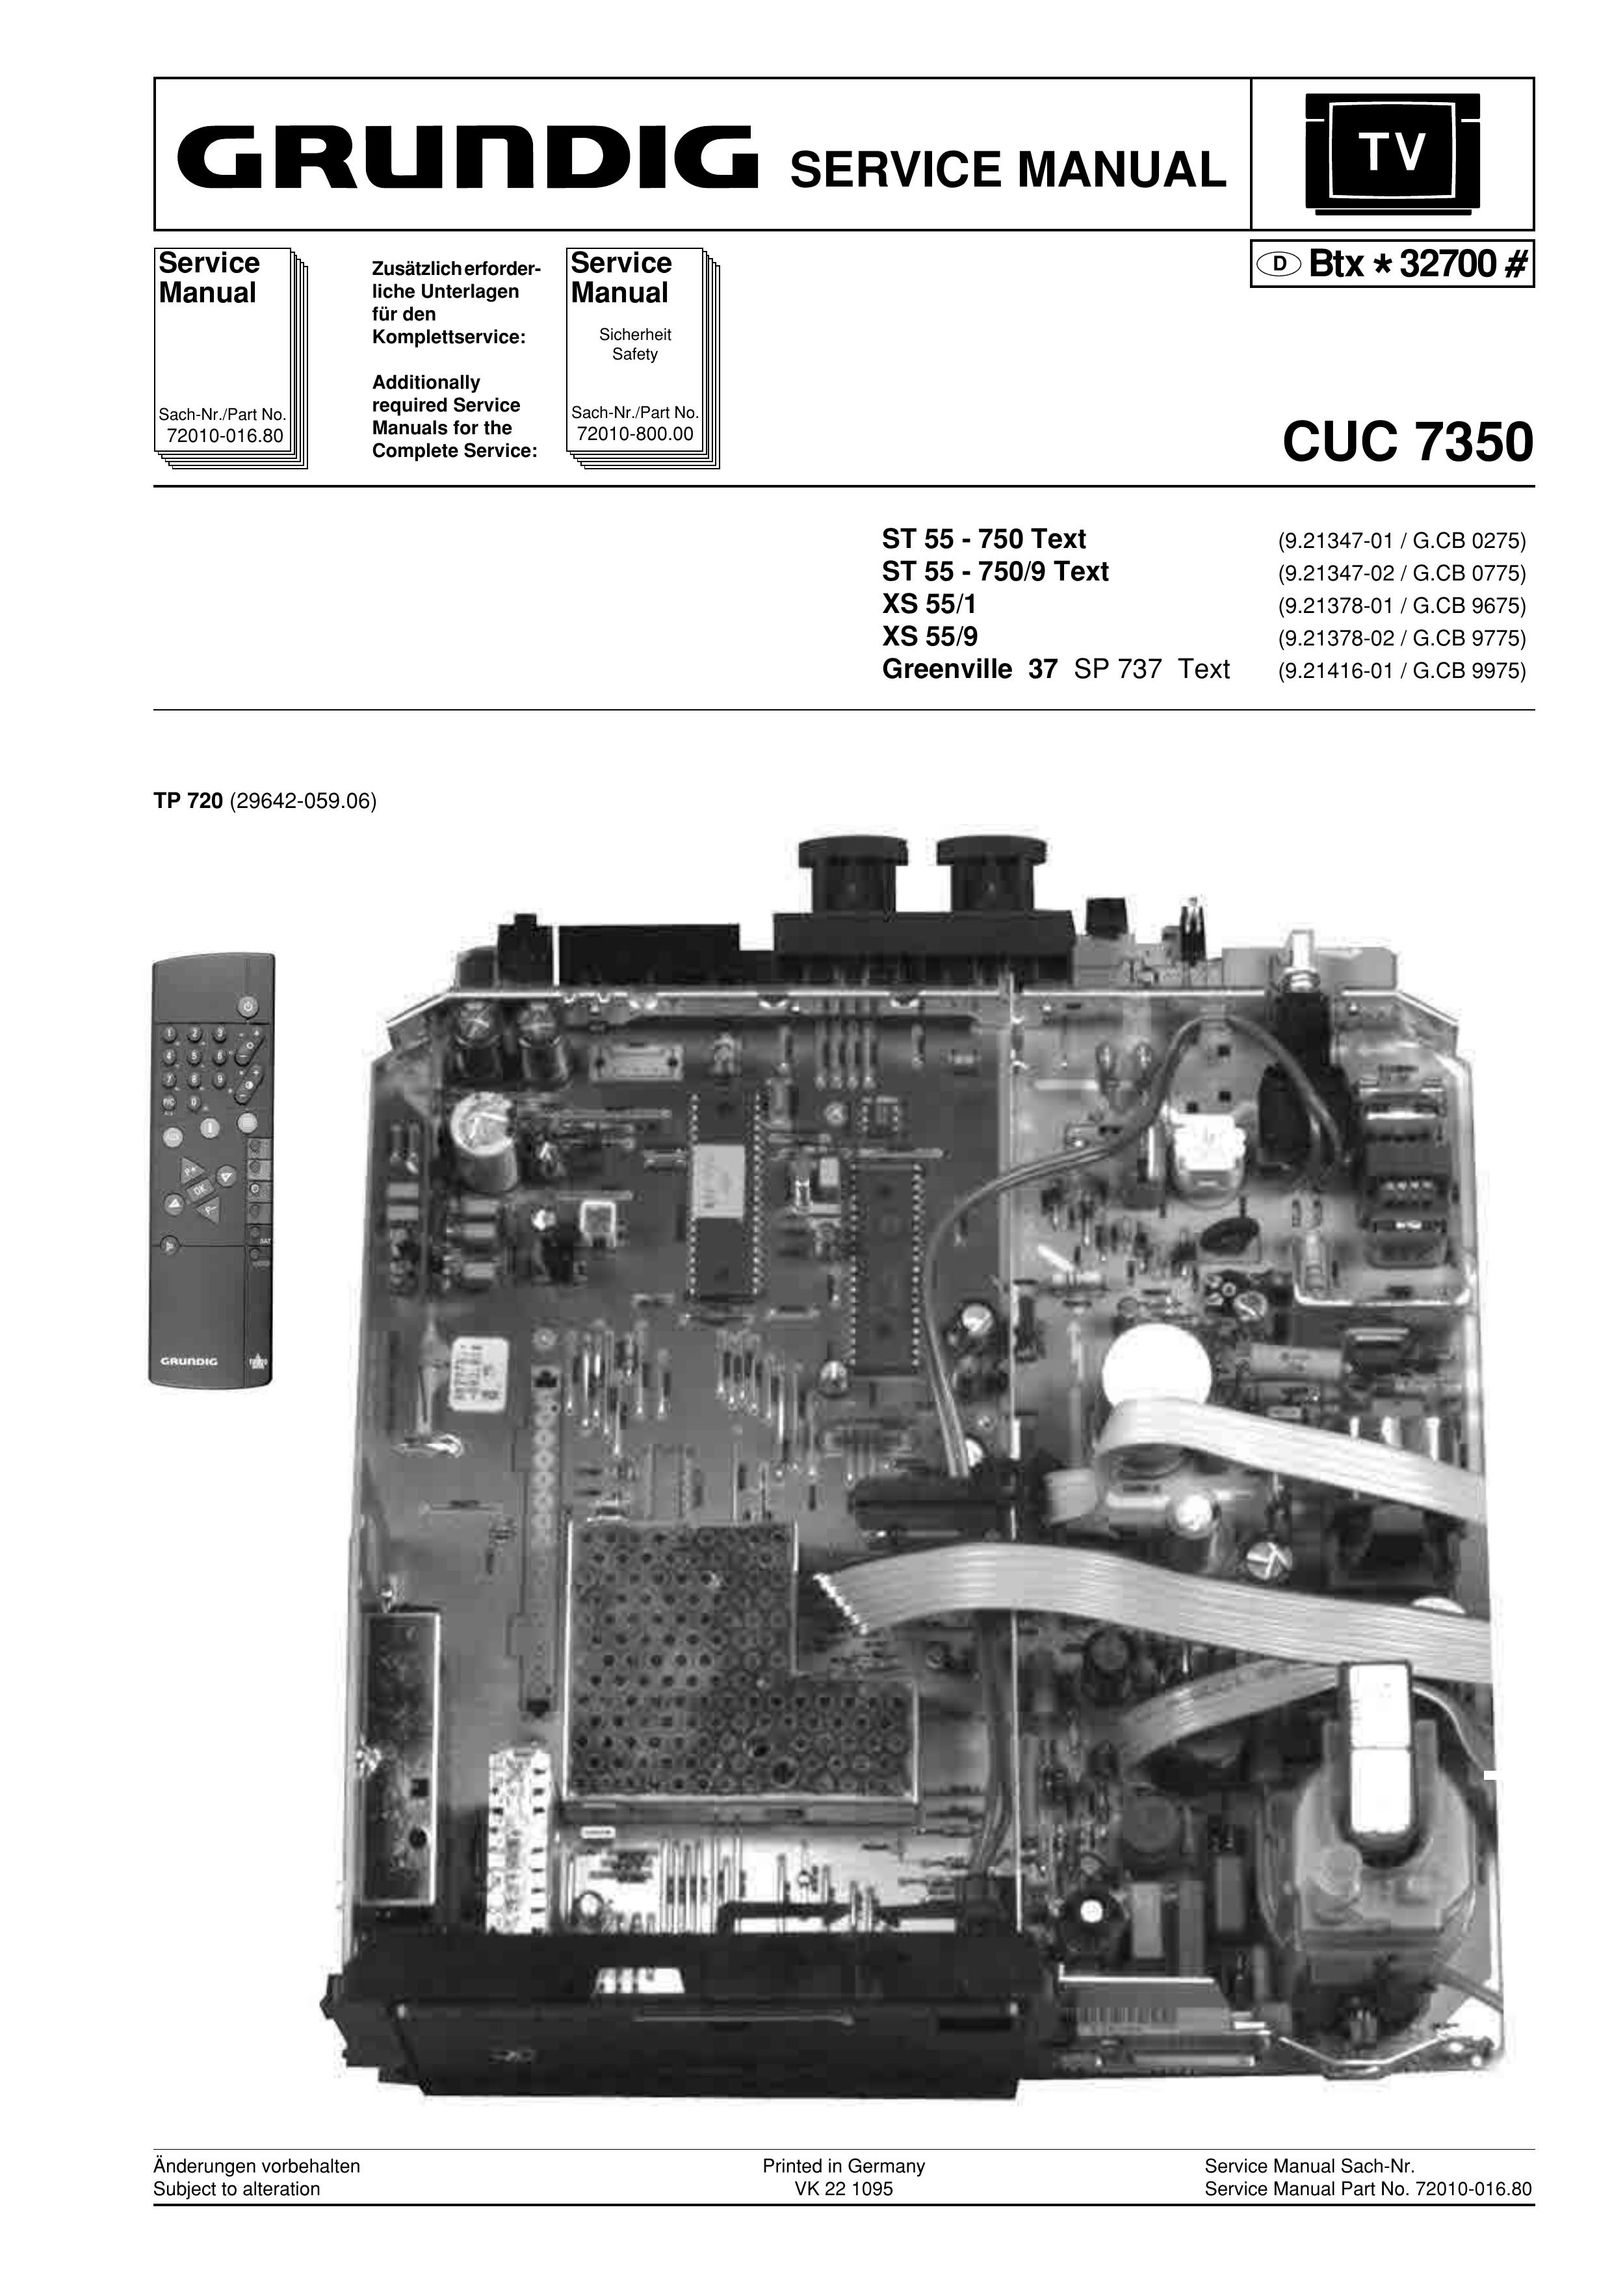 Grundig ST 55 - 750 Network Card User Manual